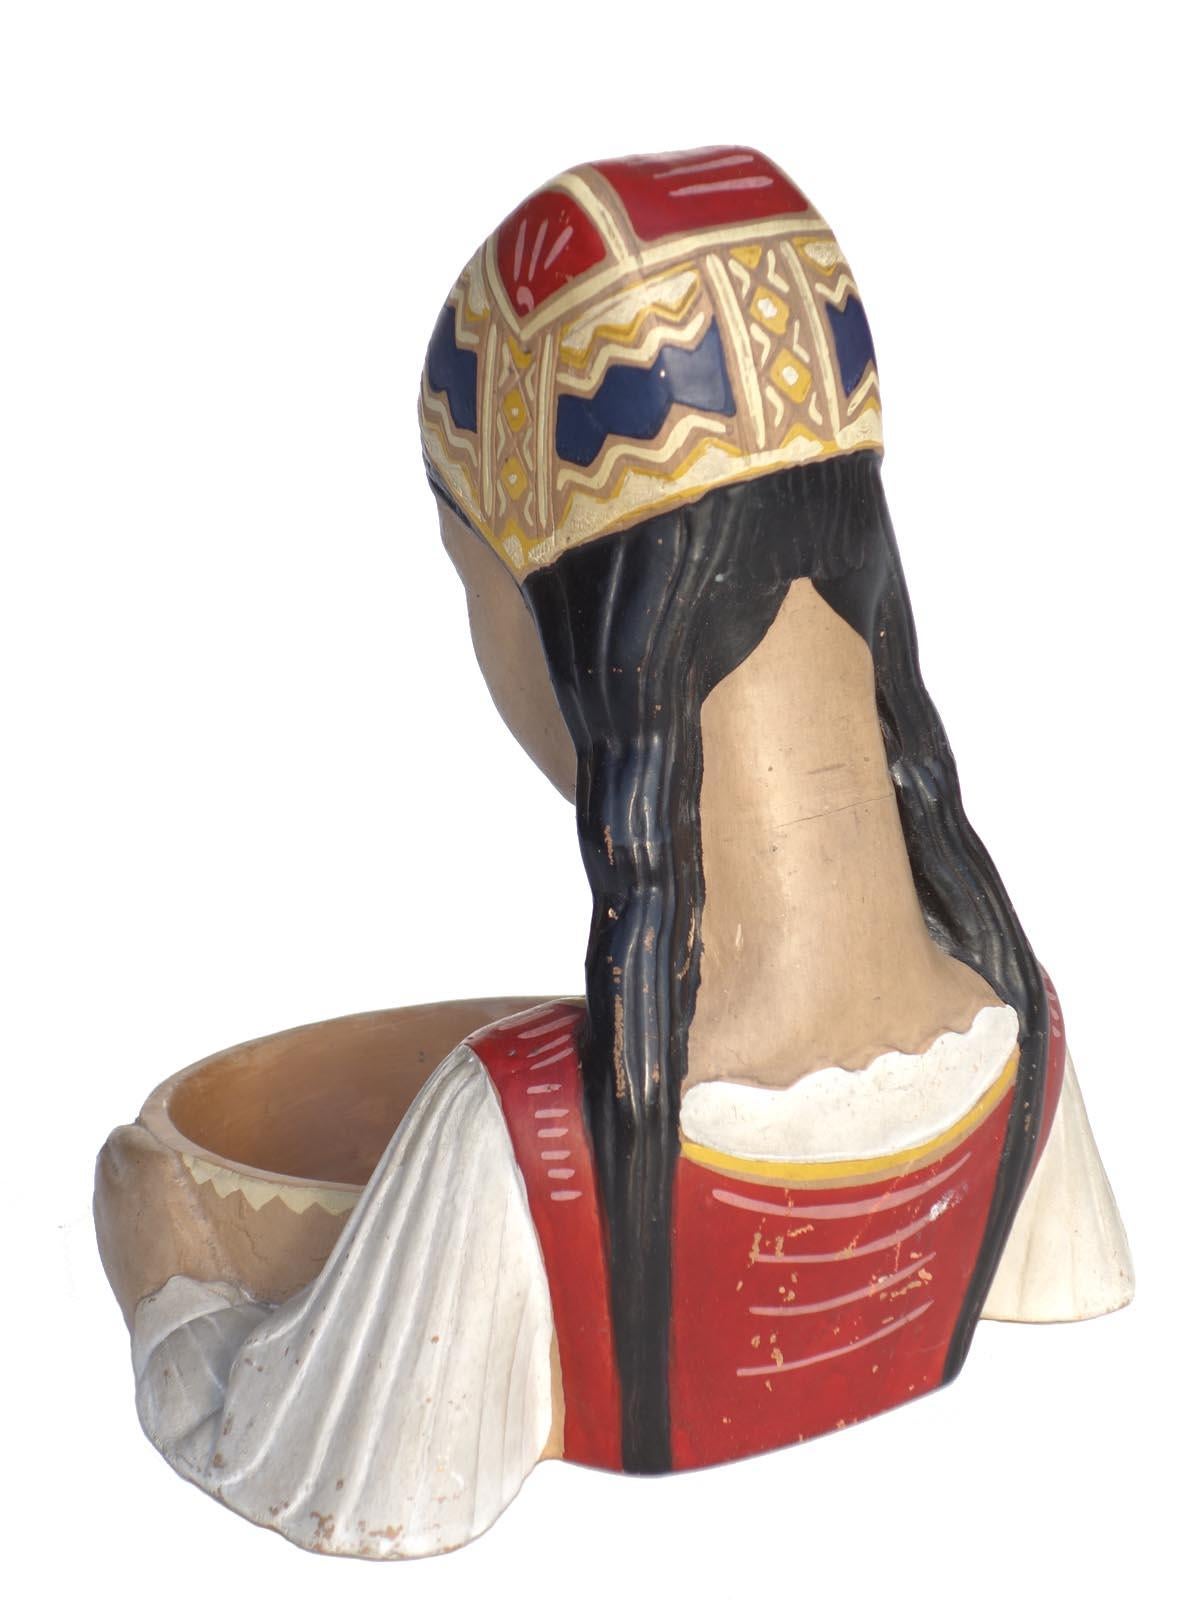 Mid-20th Century 1950s by Paolo Loddo Dorgali Sardinia Italian Midcentury Ceramic Figure For Sale